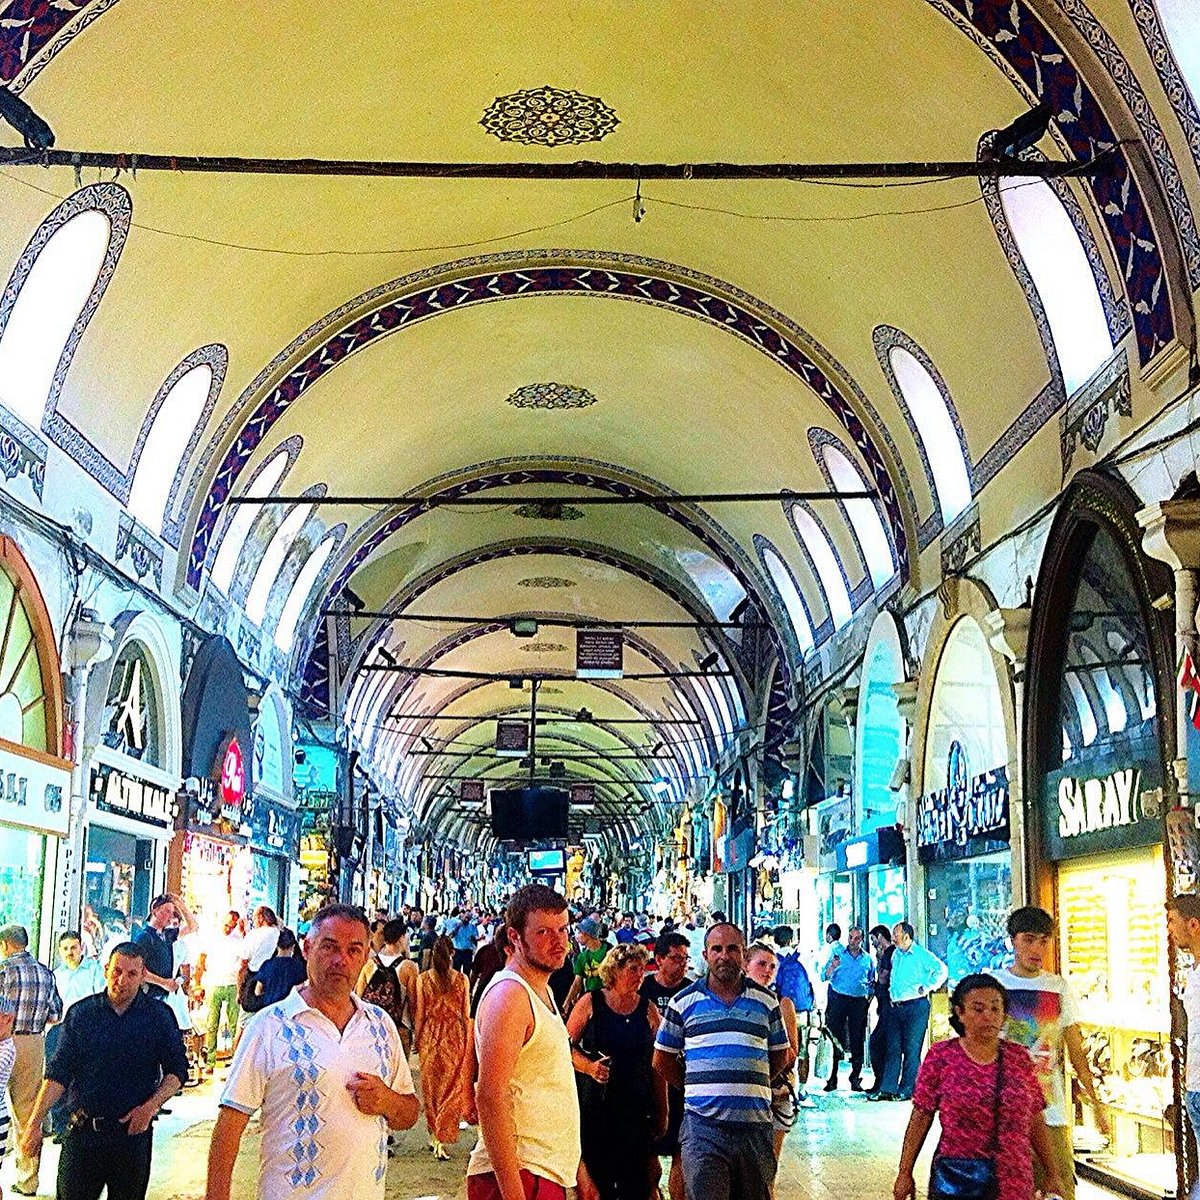 Wholesale clothing market in Istanbul turkey